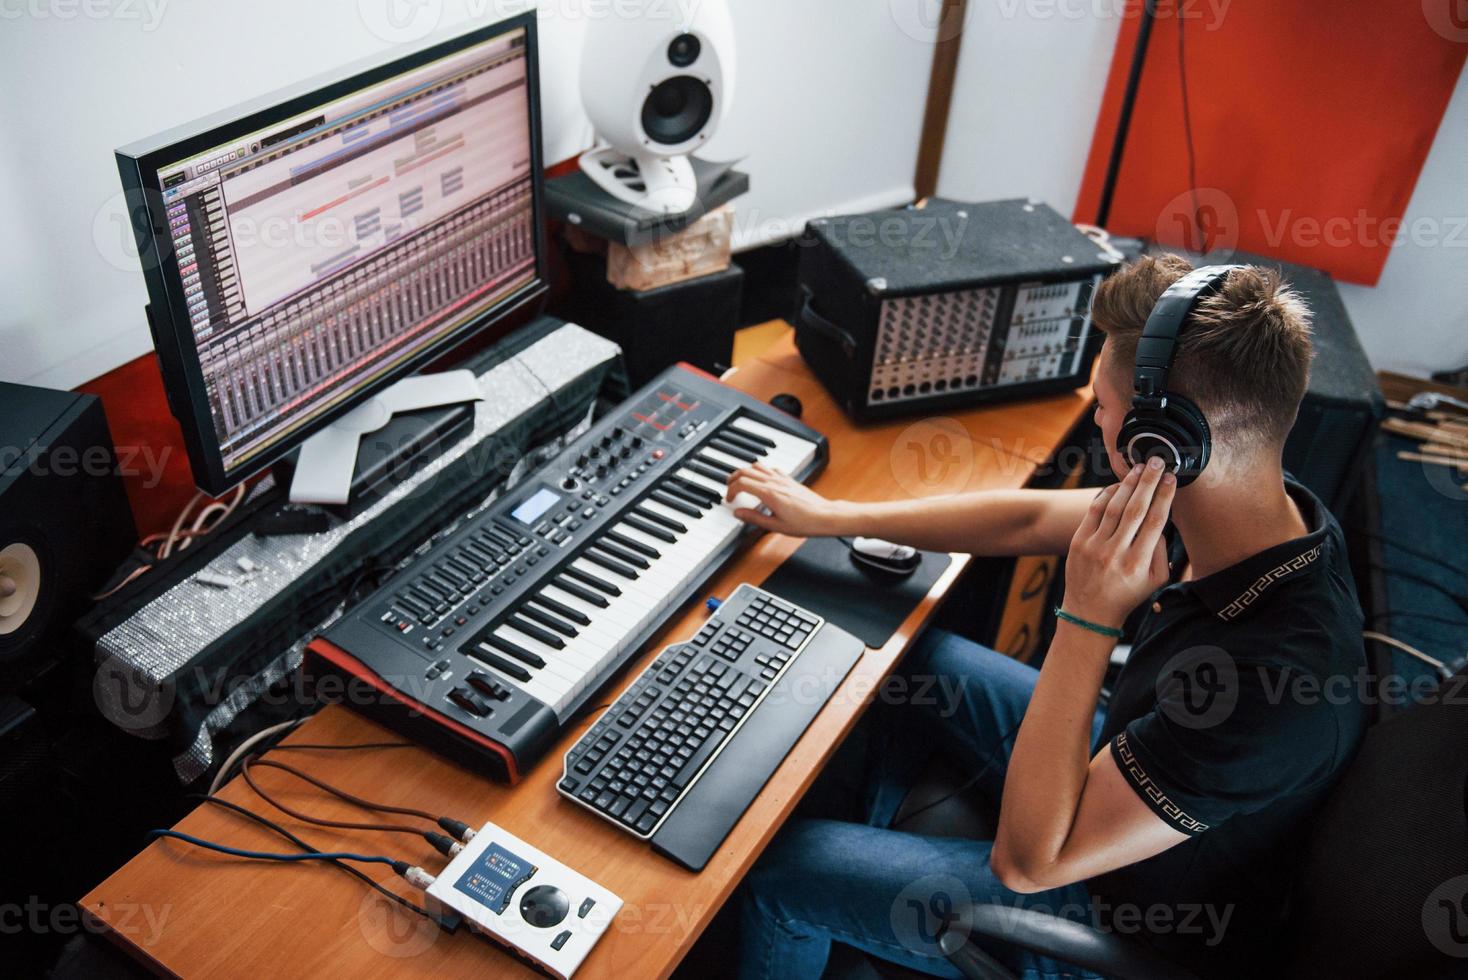 Sound engineer in headphones working and mixing music indoors in the studio photo